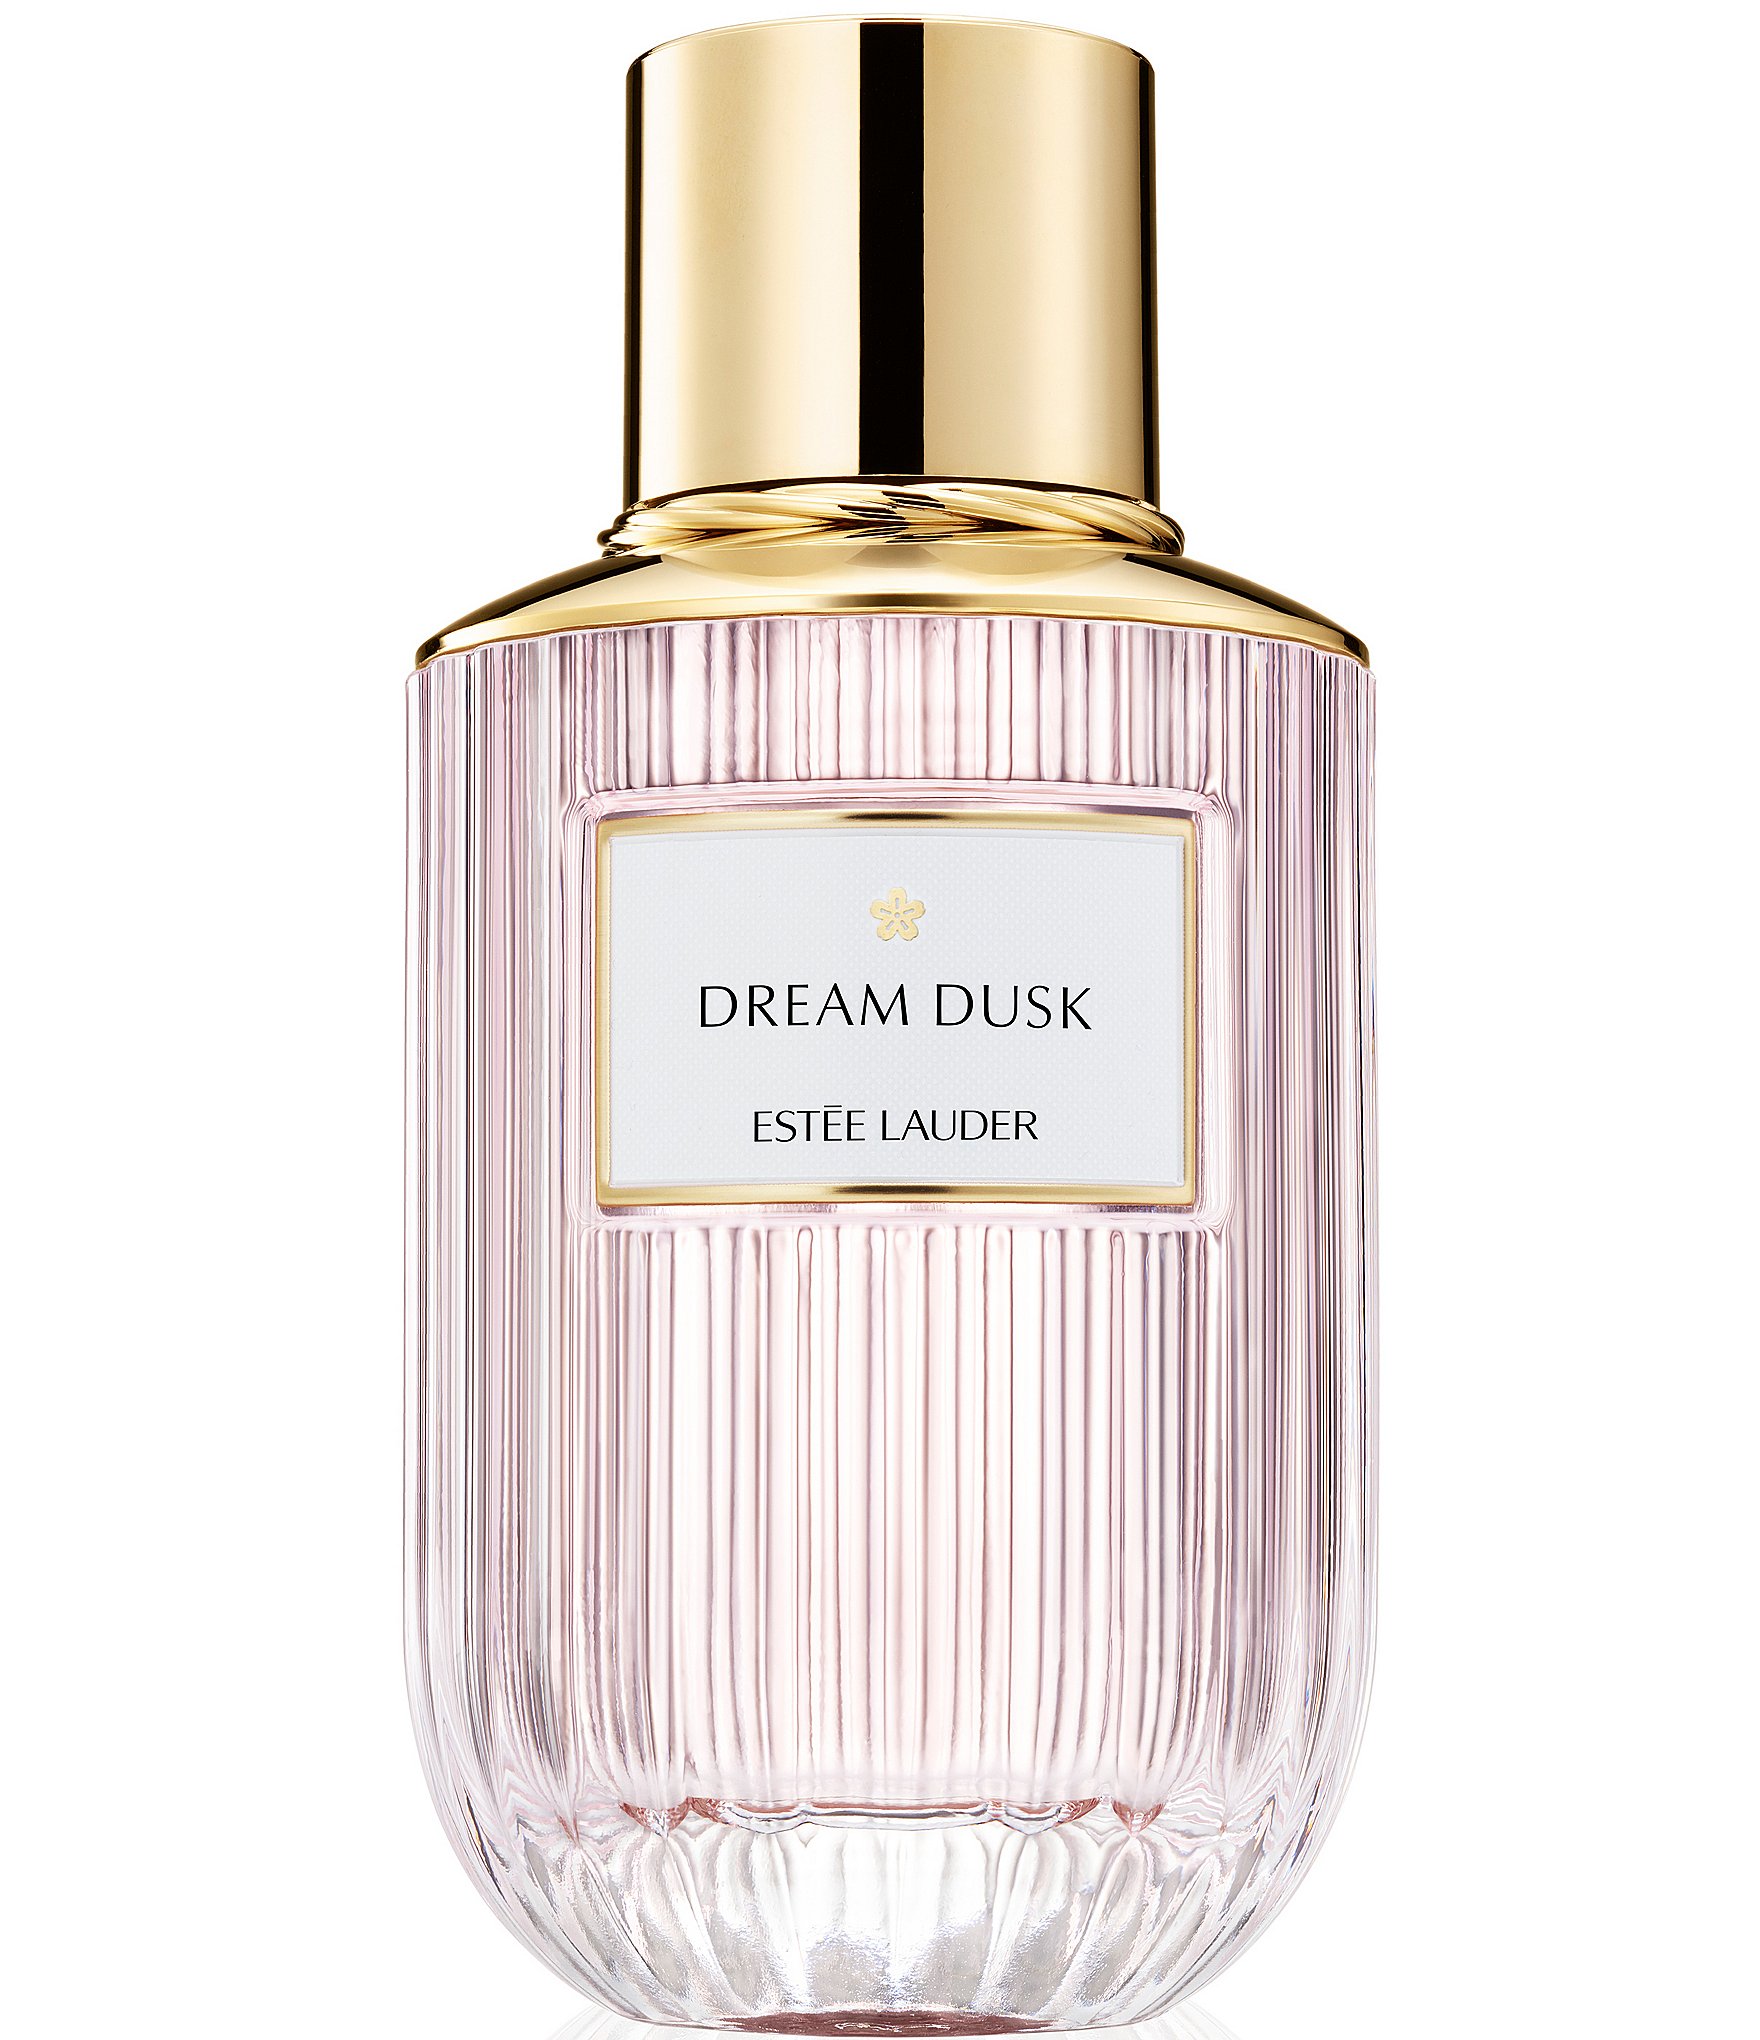 Shop Perfume California Dream online